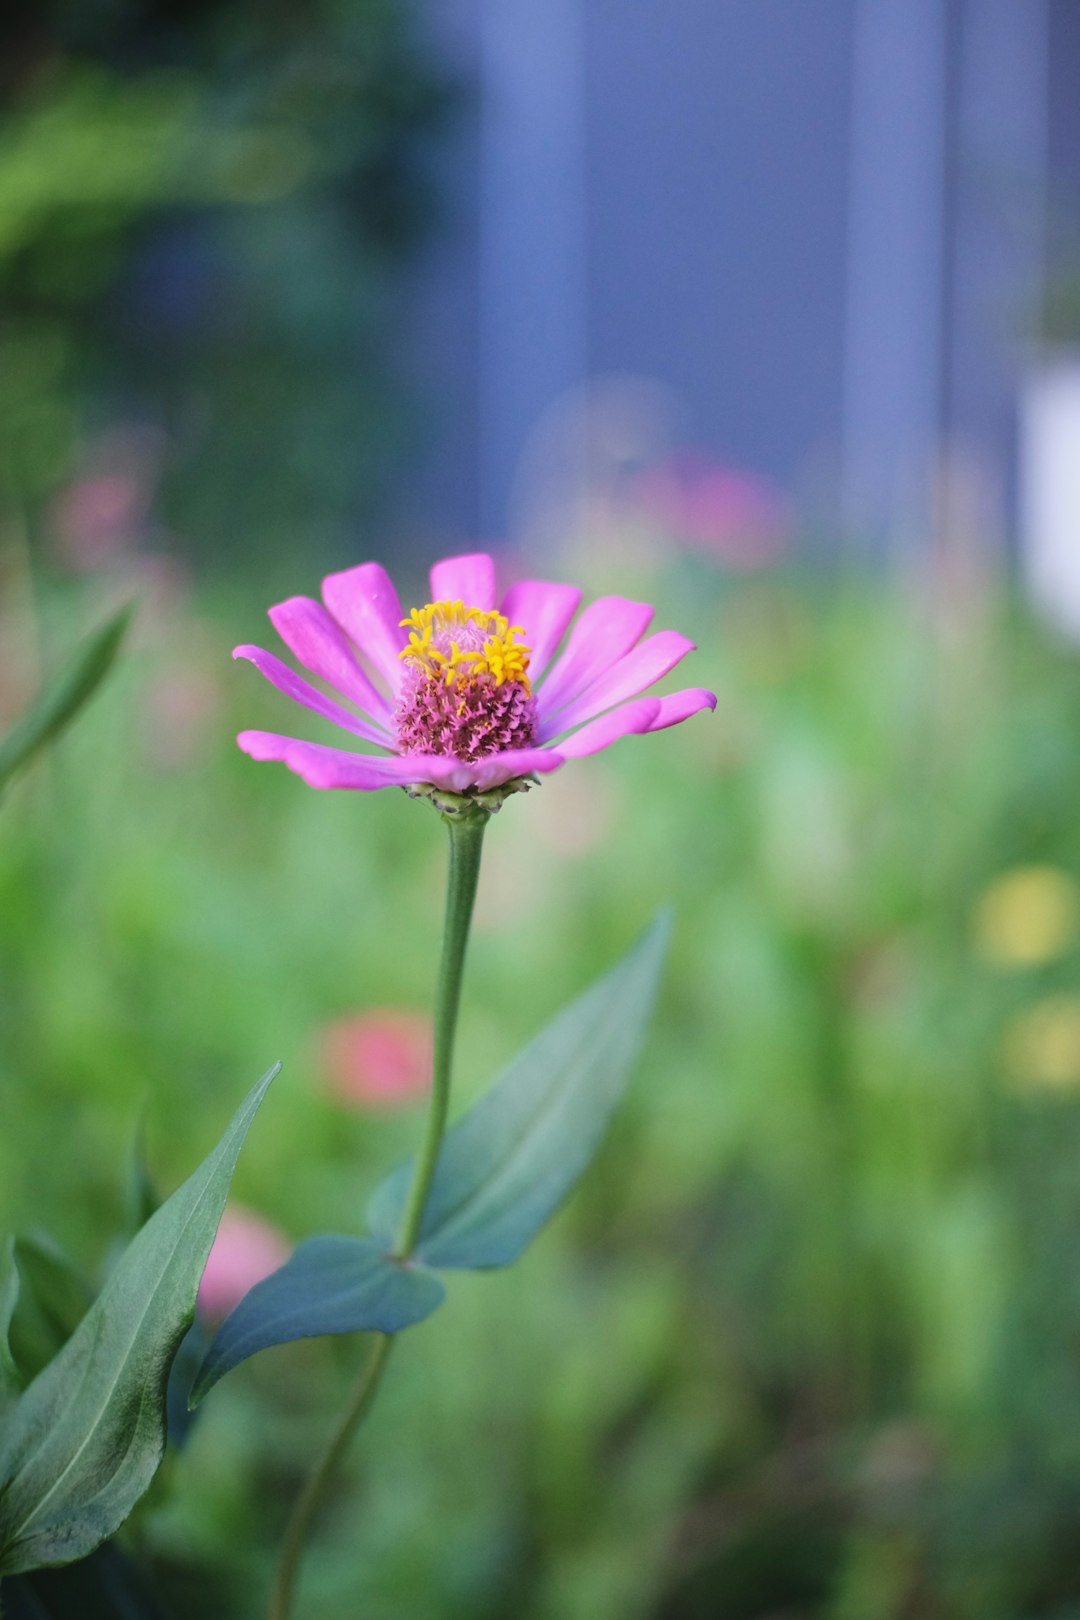 pink and yellow flower in tilt shift lens